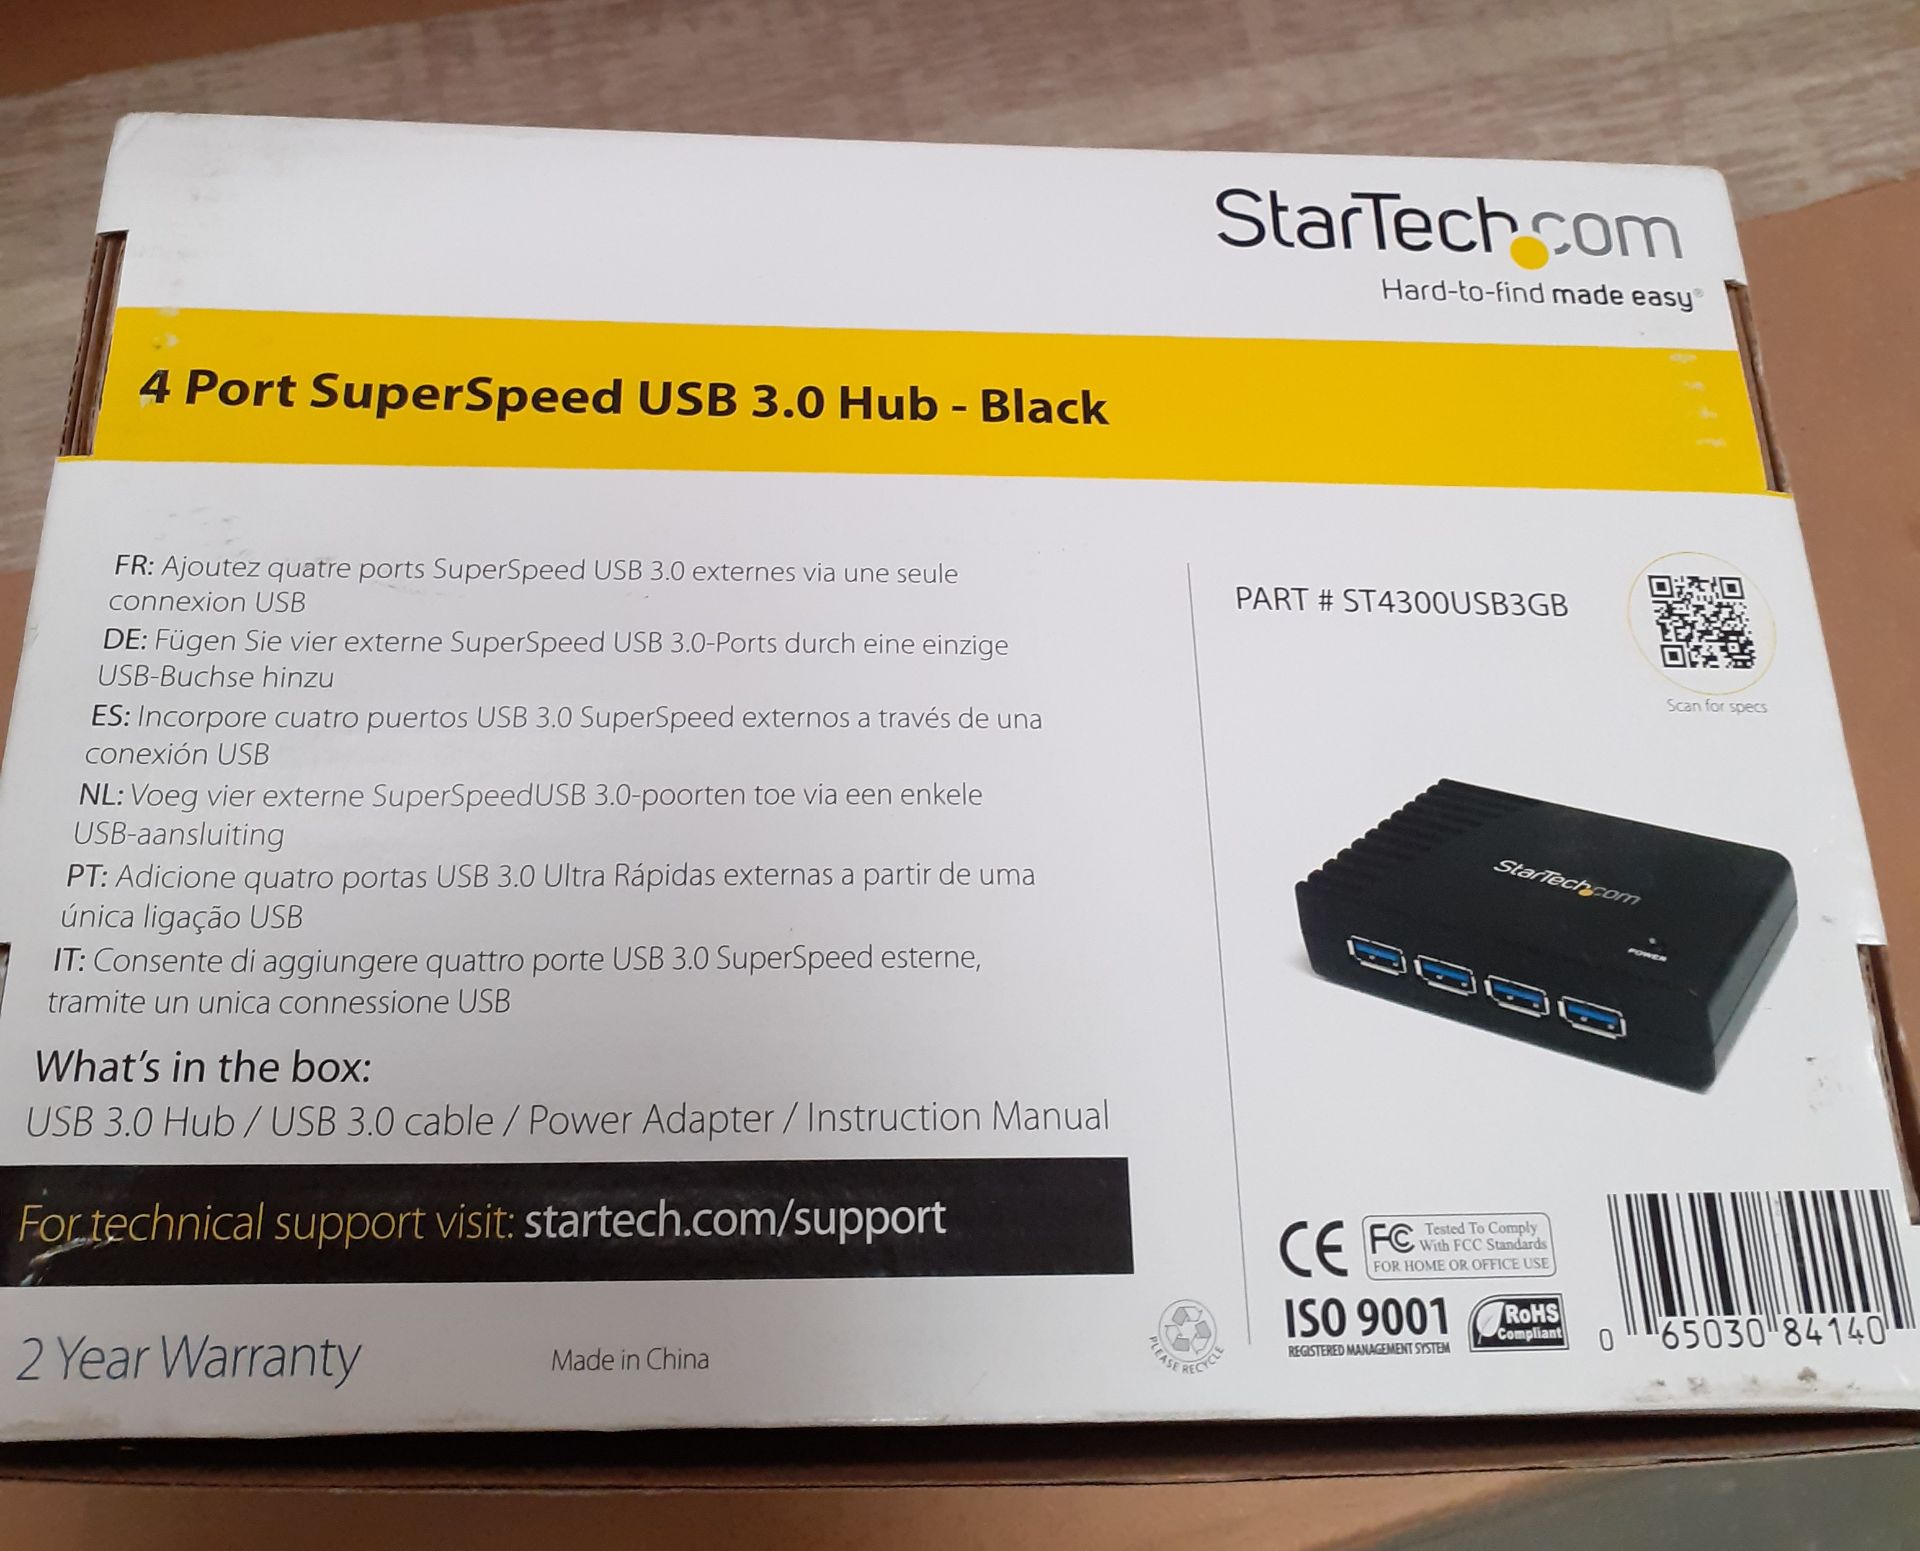 USB Hub 4 Port Startech.com - ST4300USB3GB Black (Qnty: 1) - Image 2 of 4